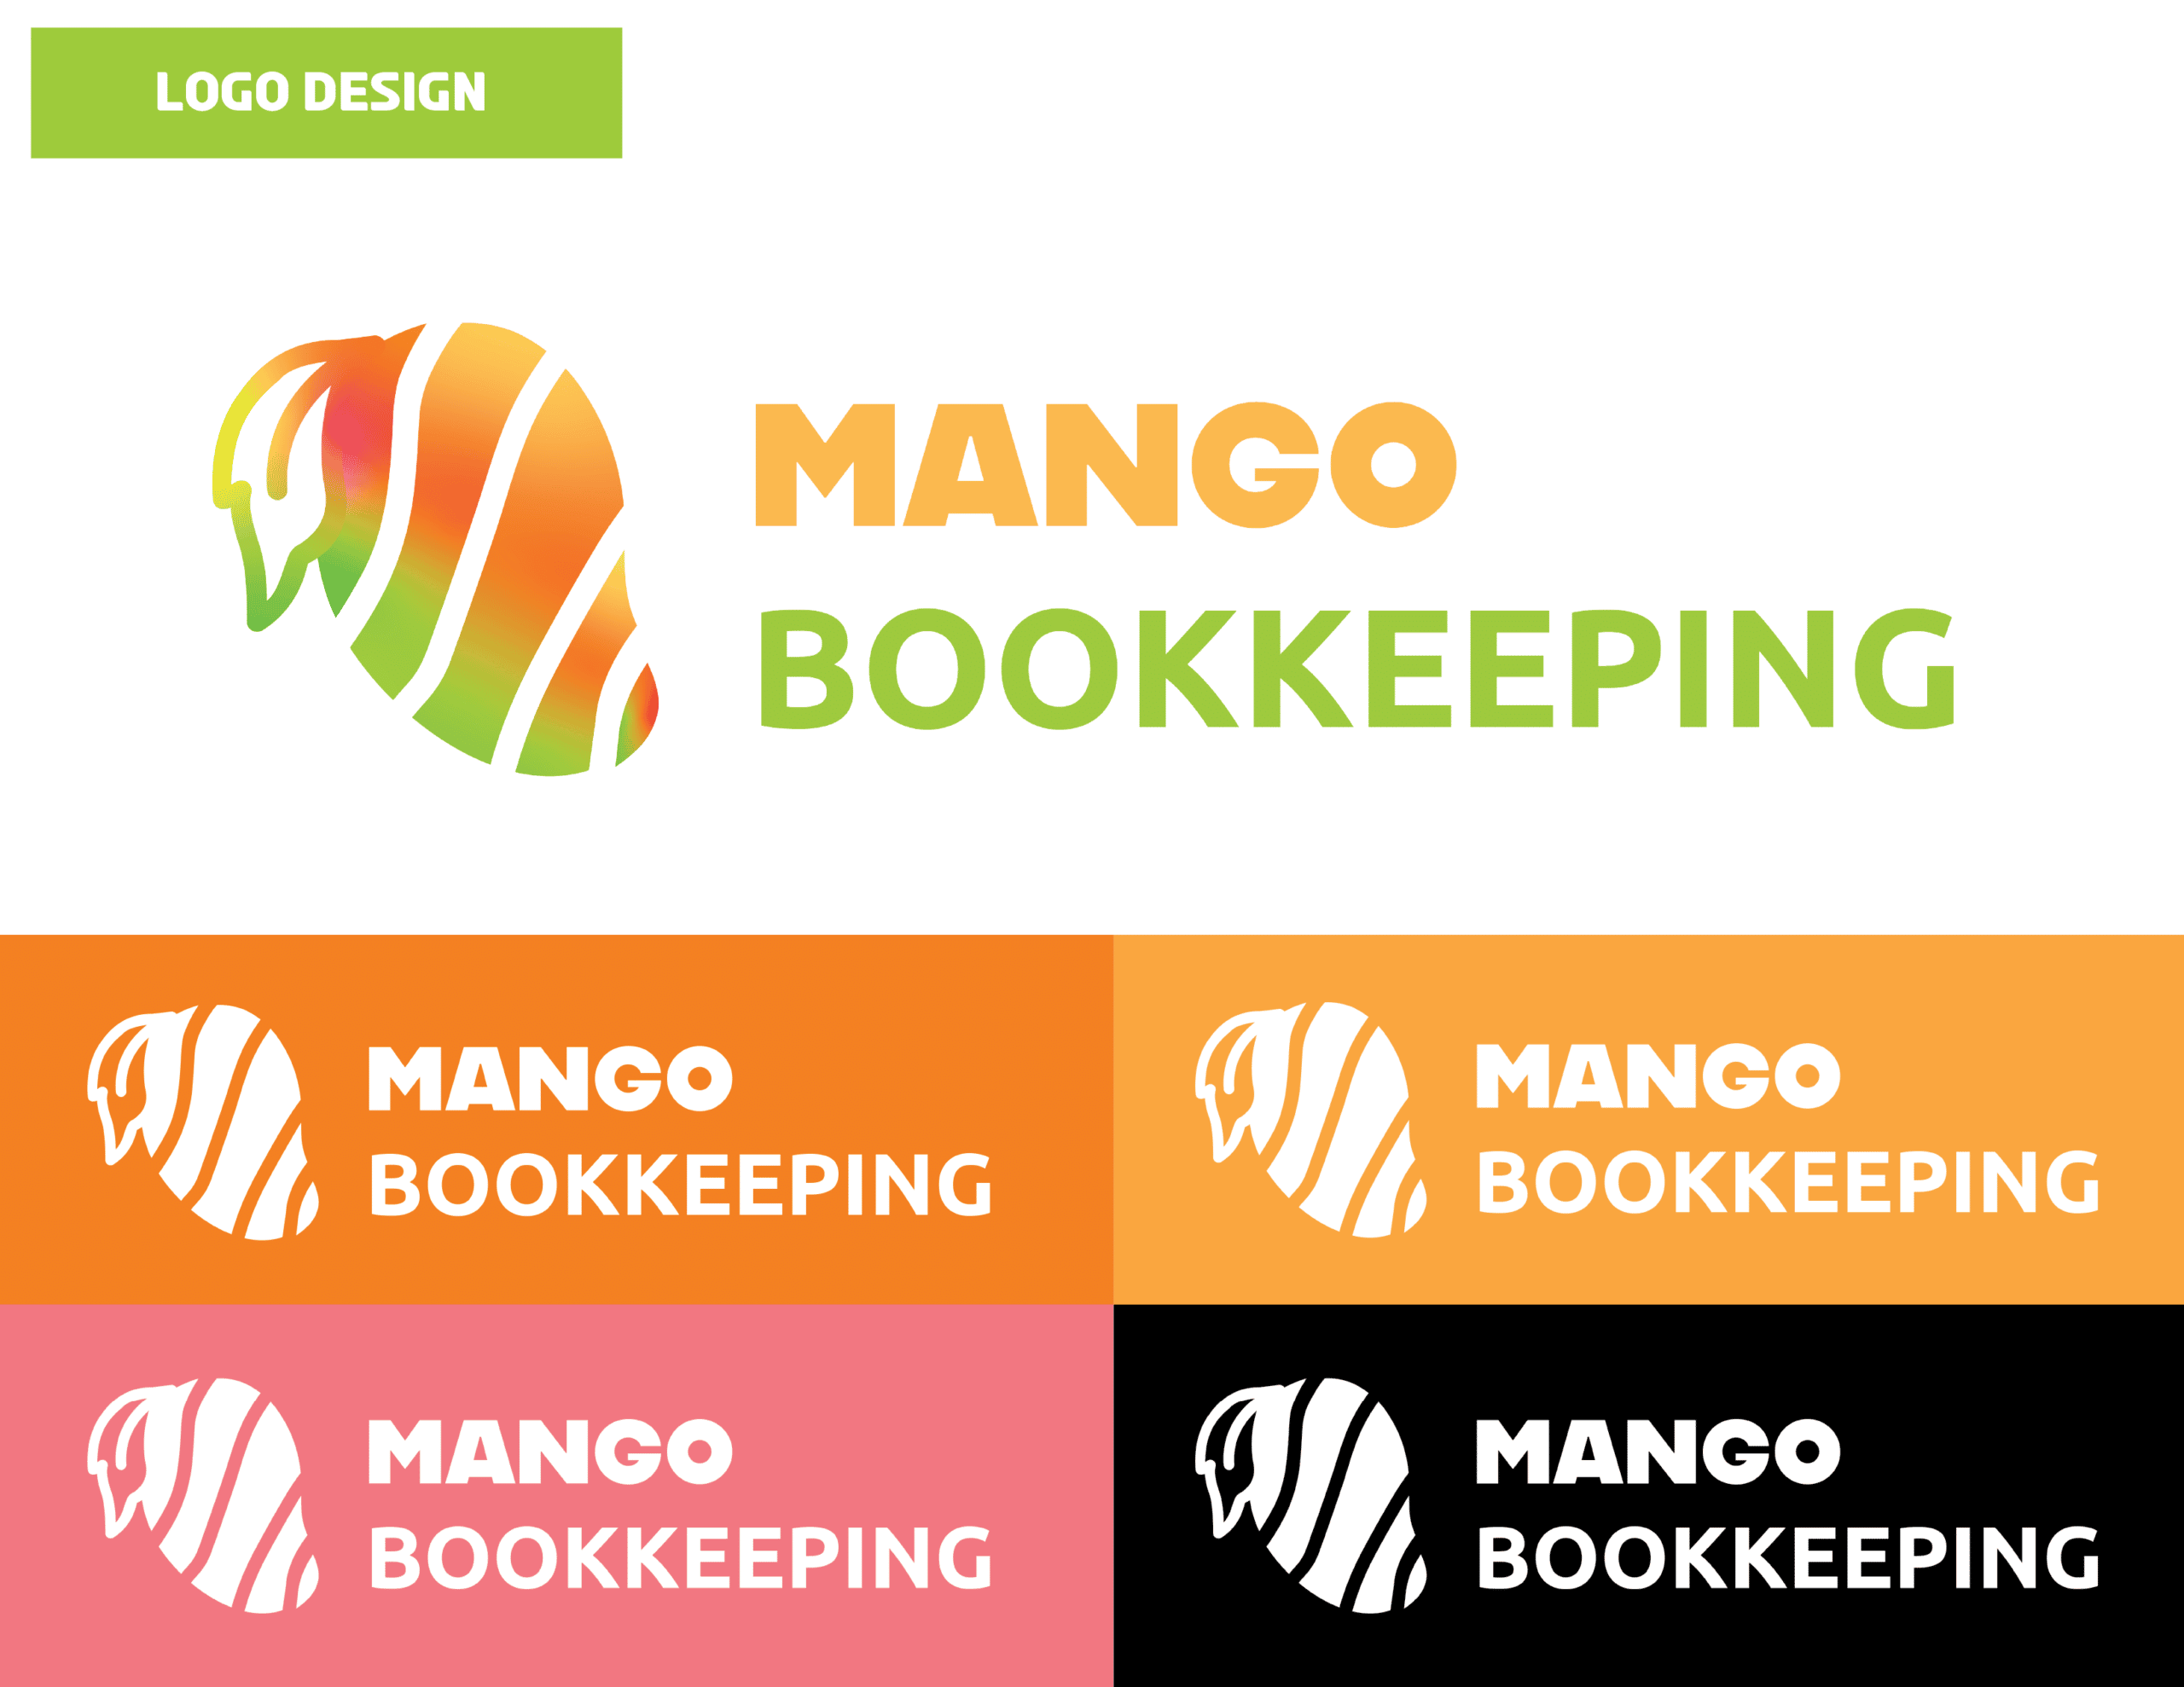 01_MangoBookkeeping_Logo Design